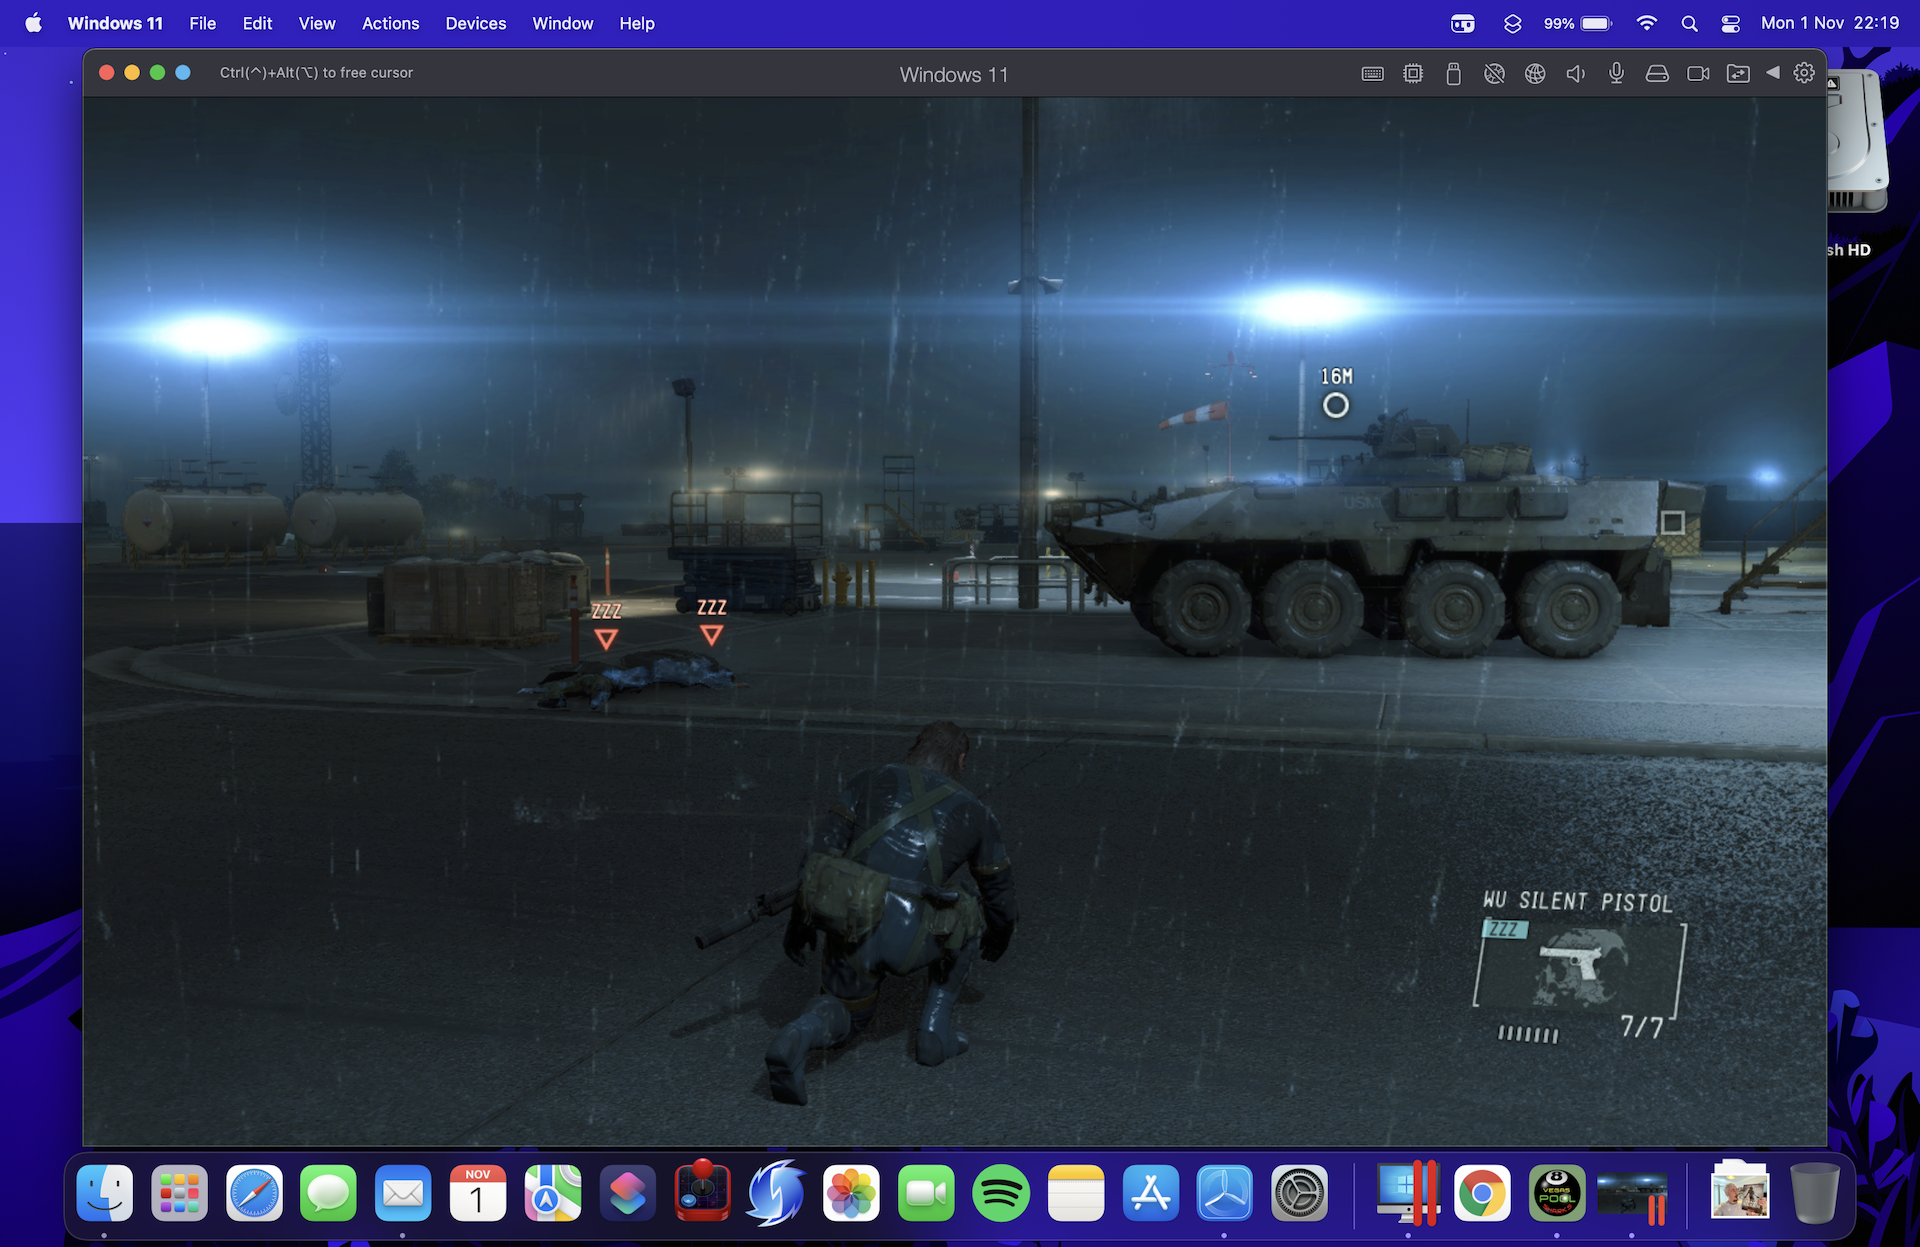 Metal Gear Solid V: Ground Zeroes running in Parallels Desktop on an M1 Pro MacBook Pro